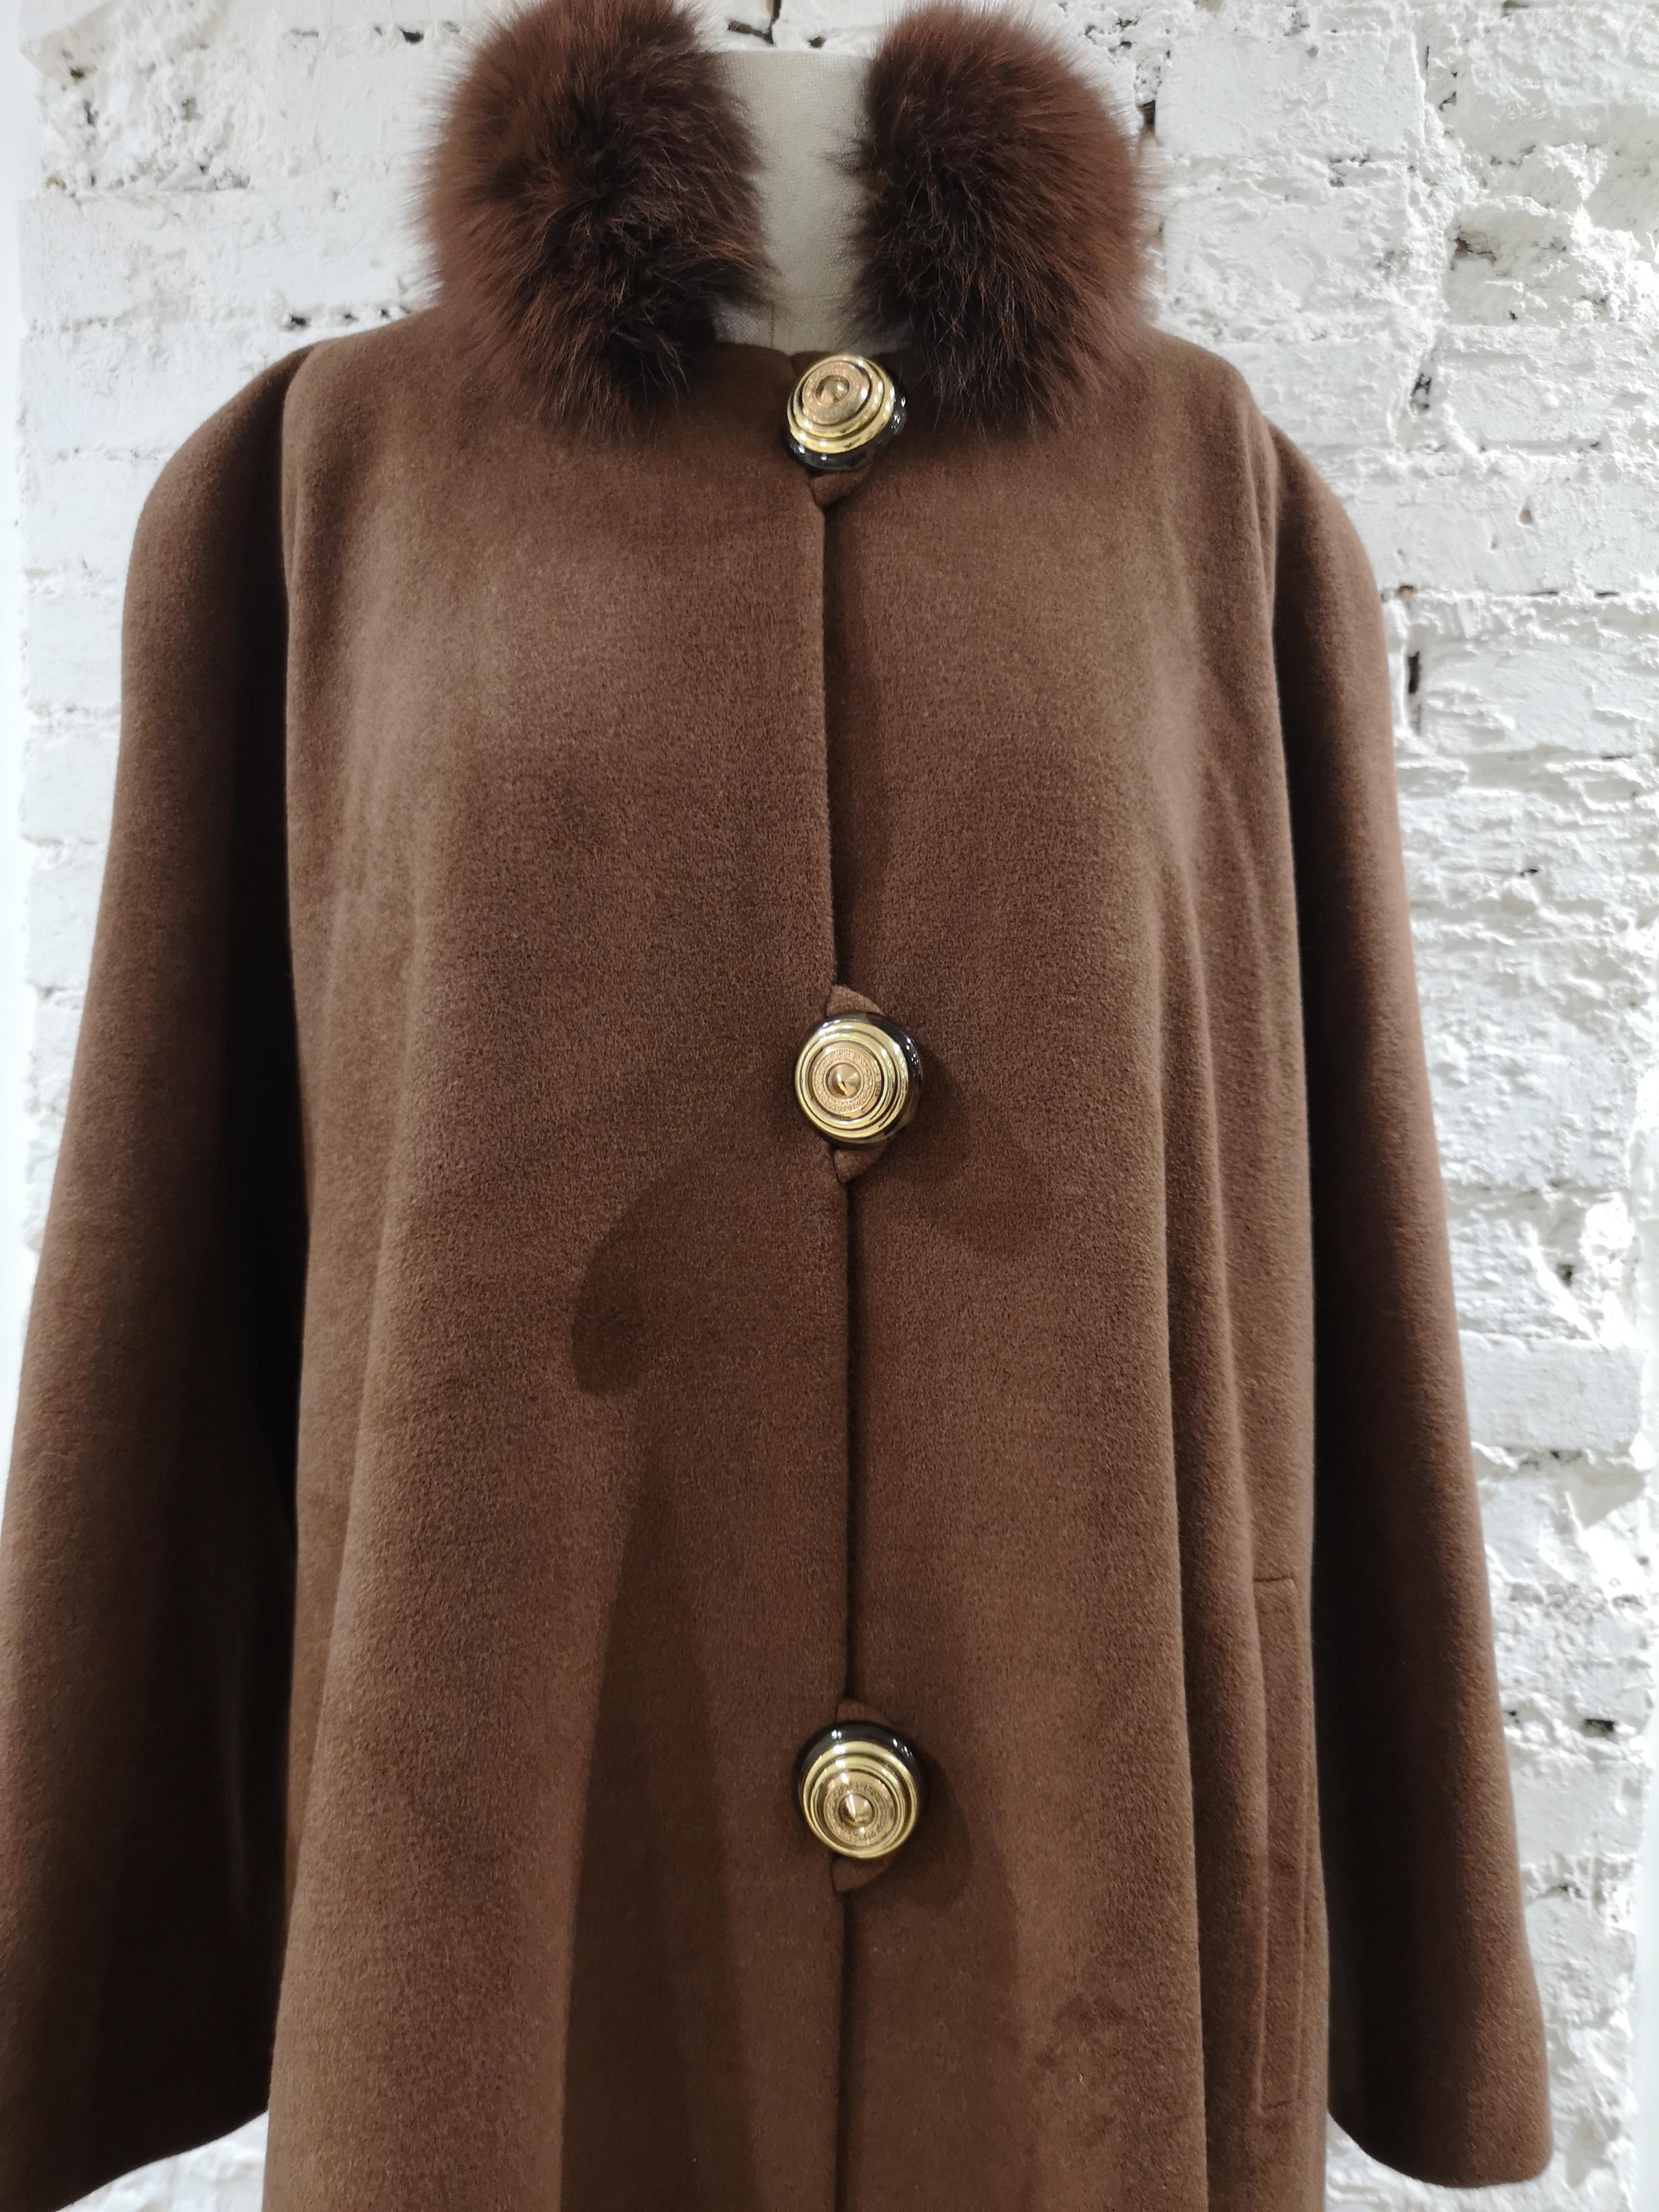 Gai Mattiolo brown wool cachemire coat In Excellent Condition For Sale In Capri, IT